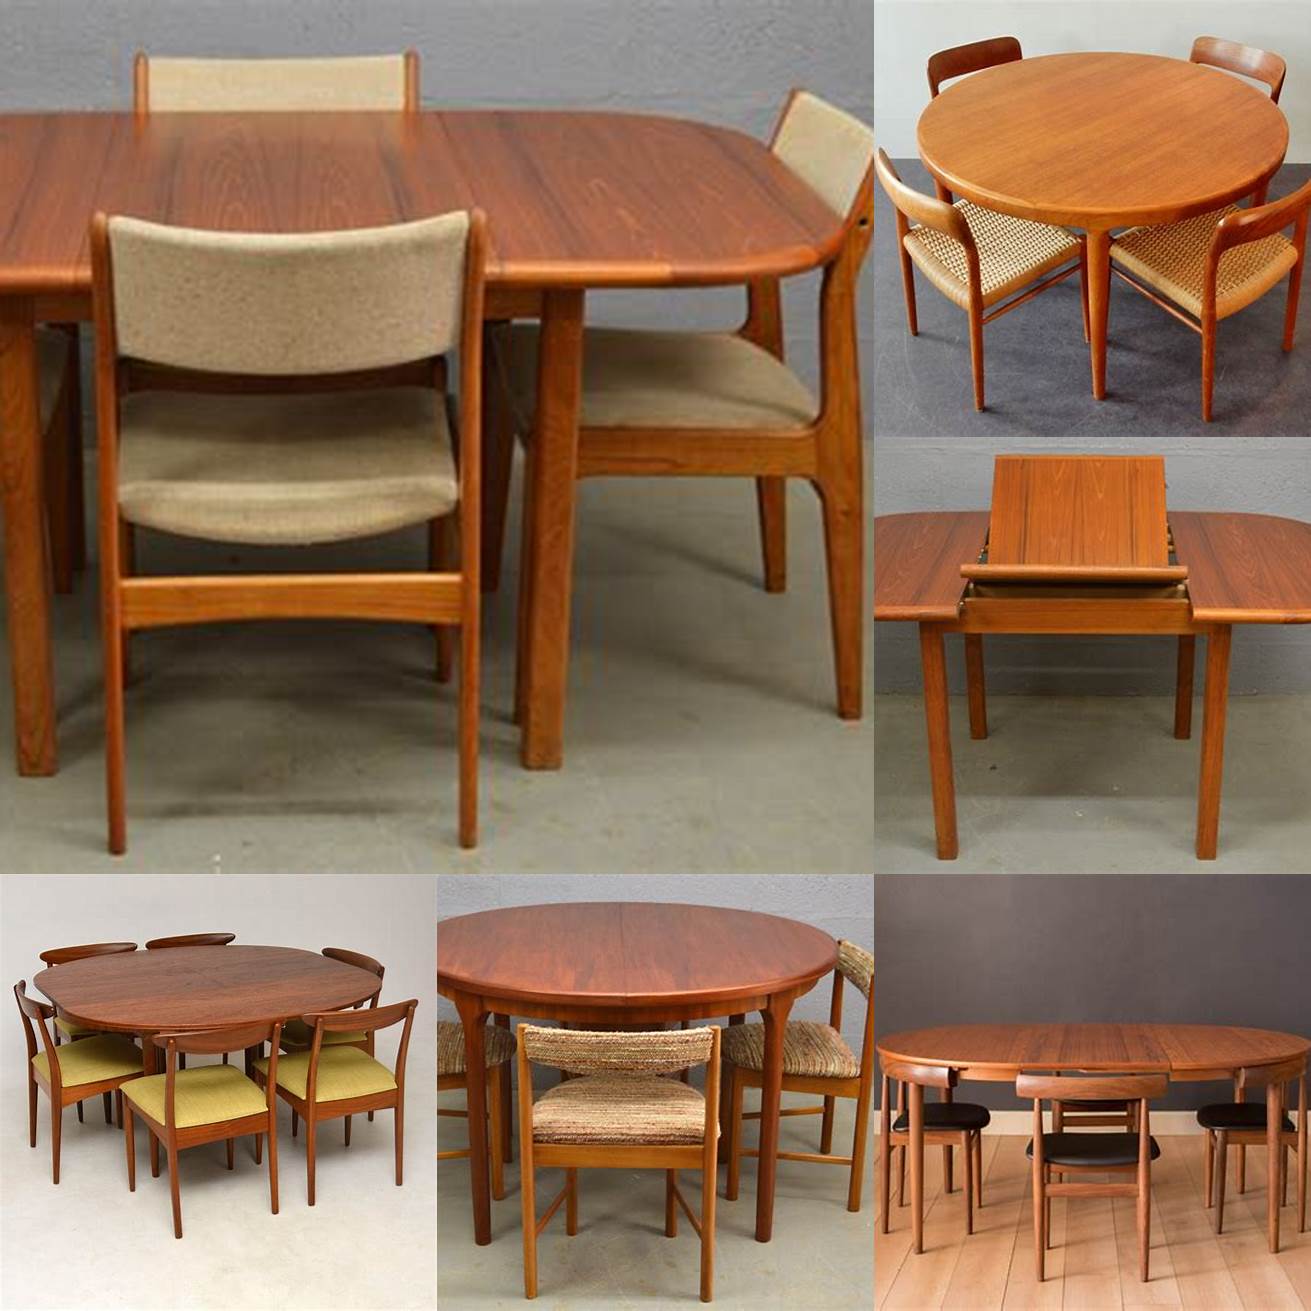 Teak Table with Vintage Design